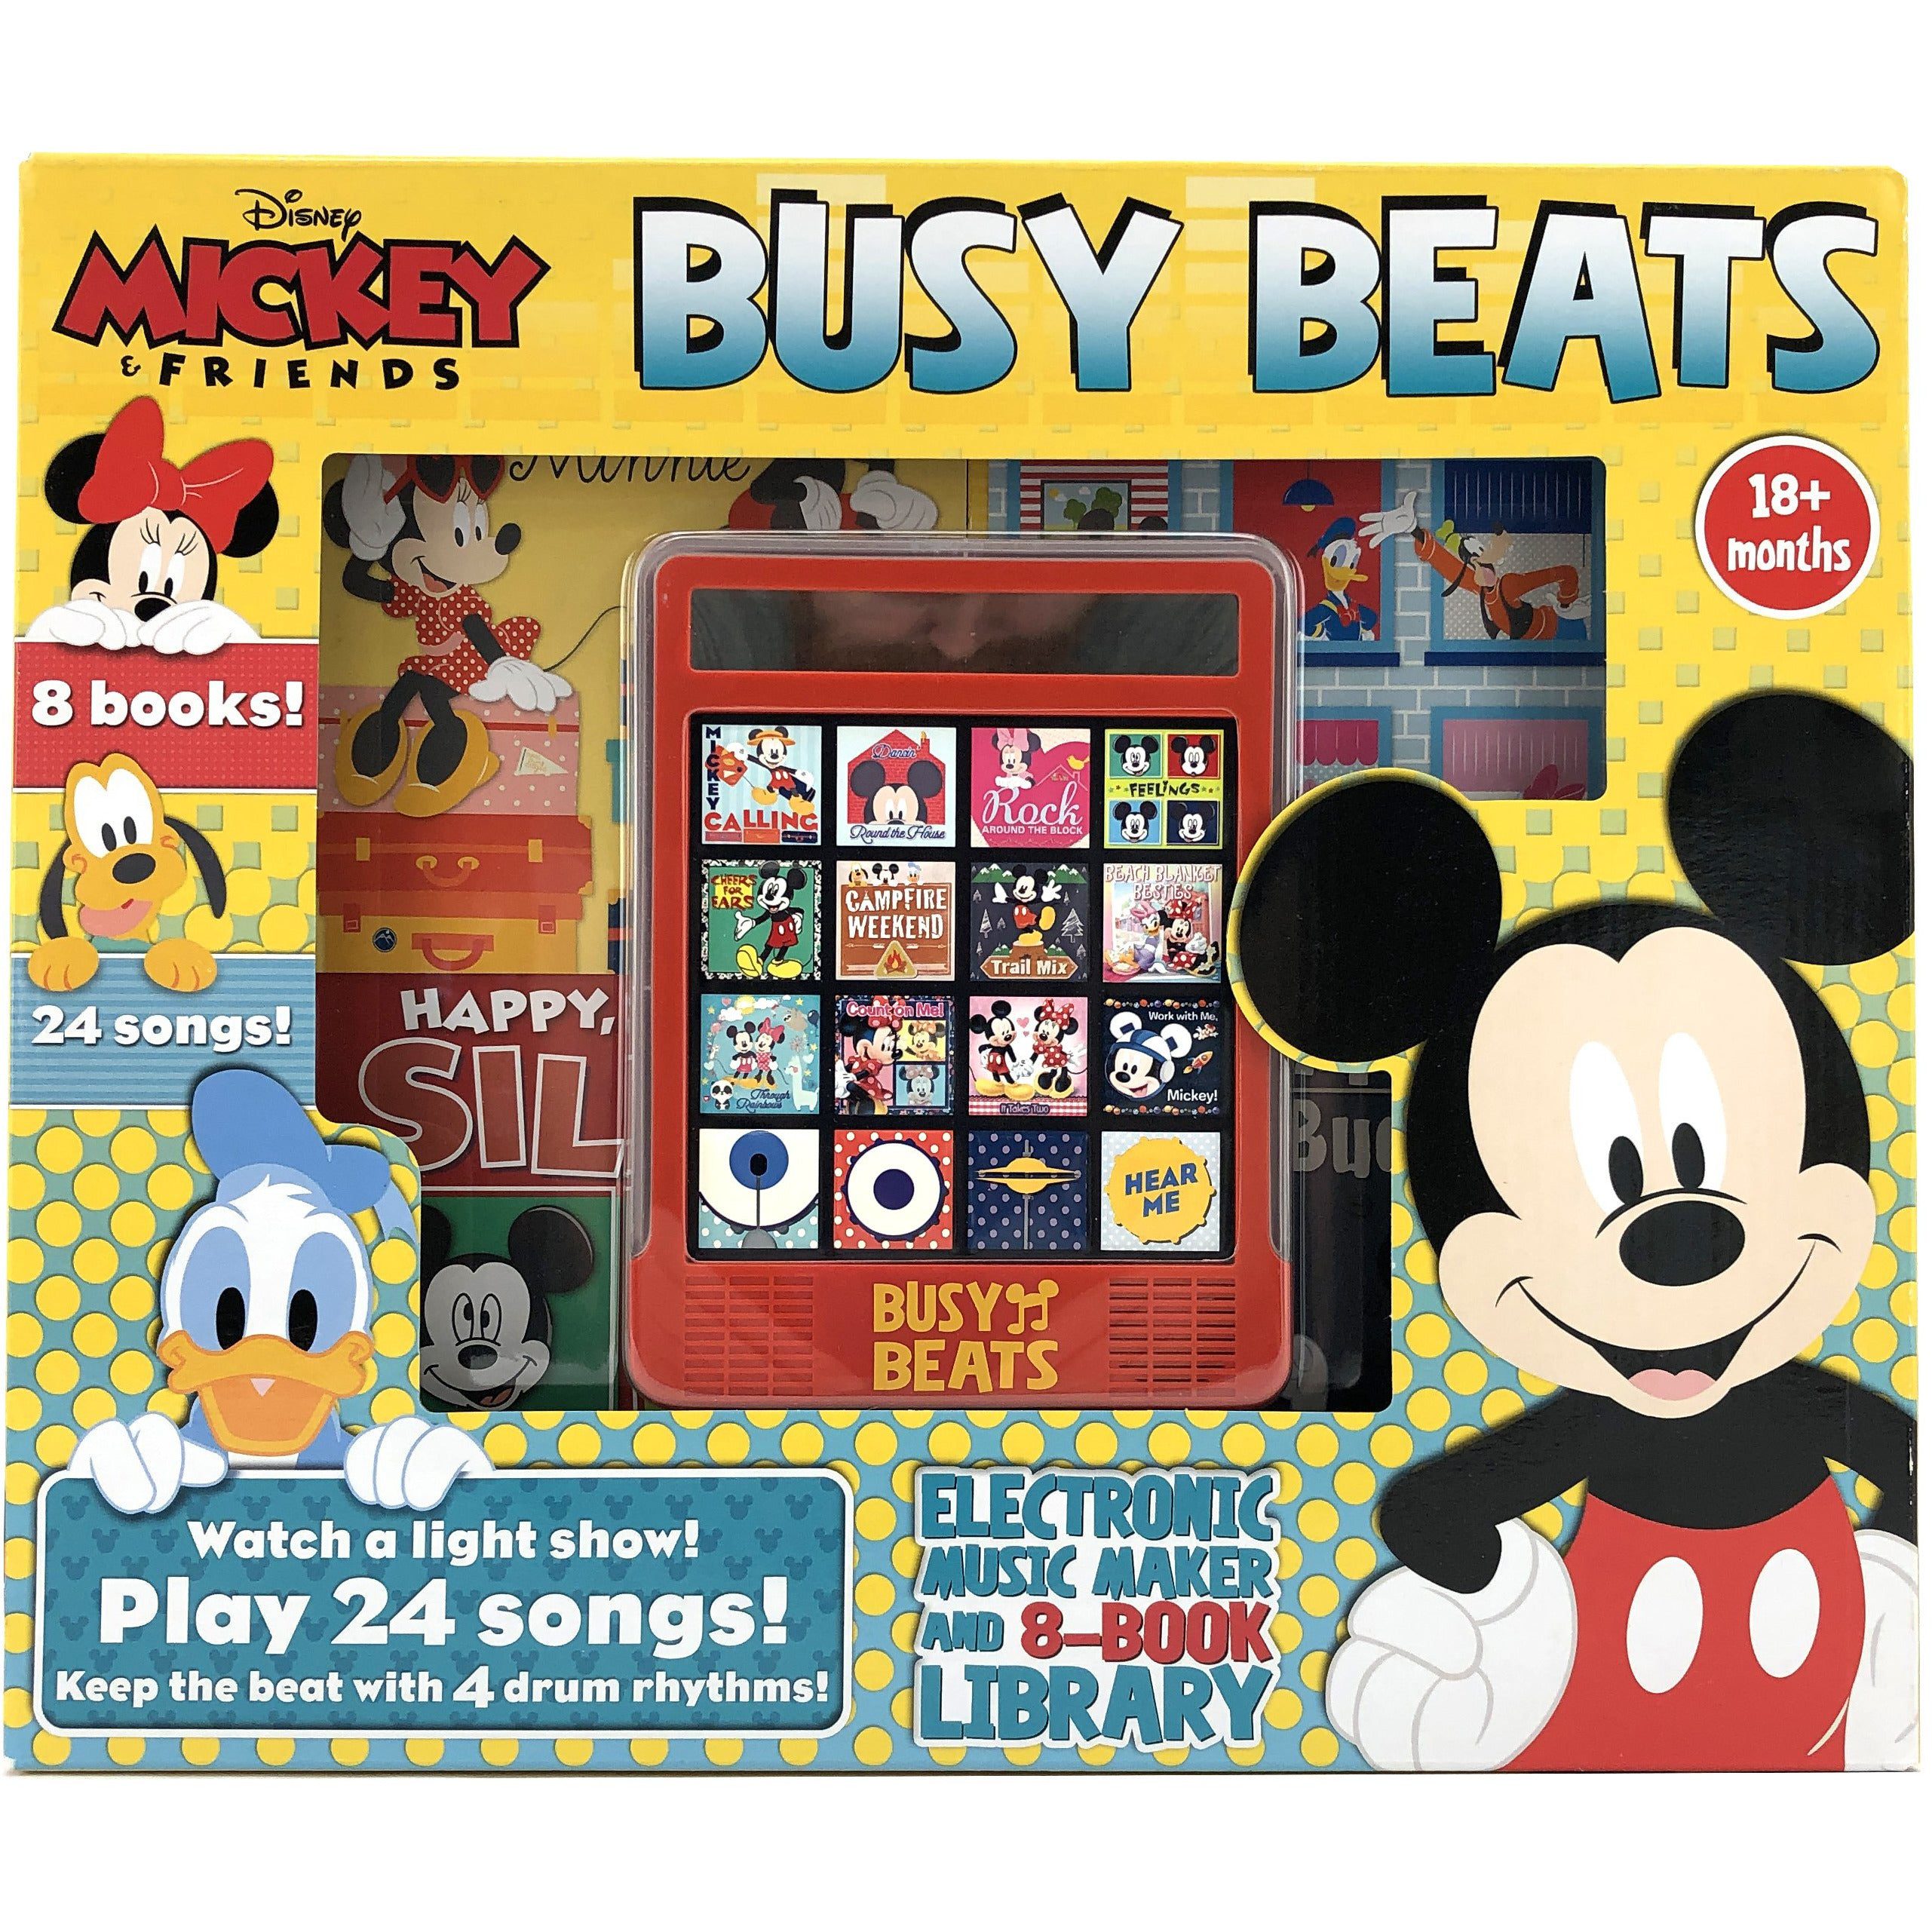 Mickey & Friends Electronic music maker